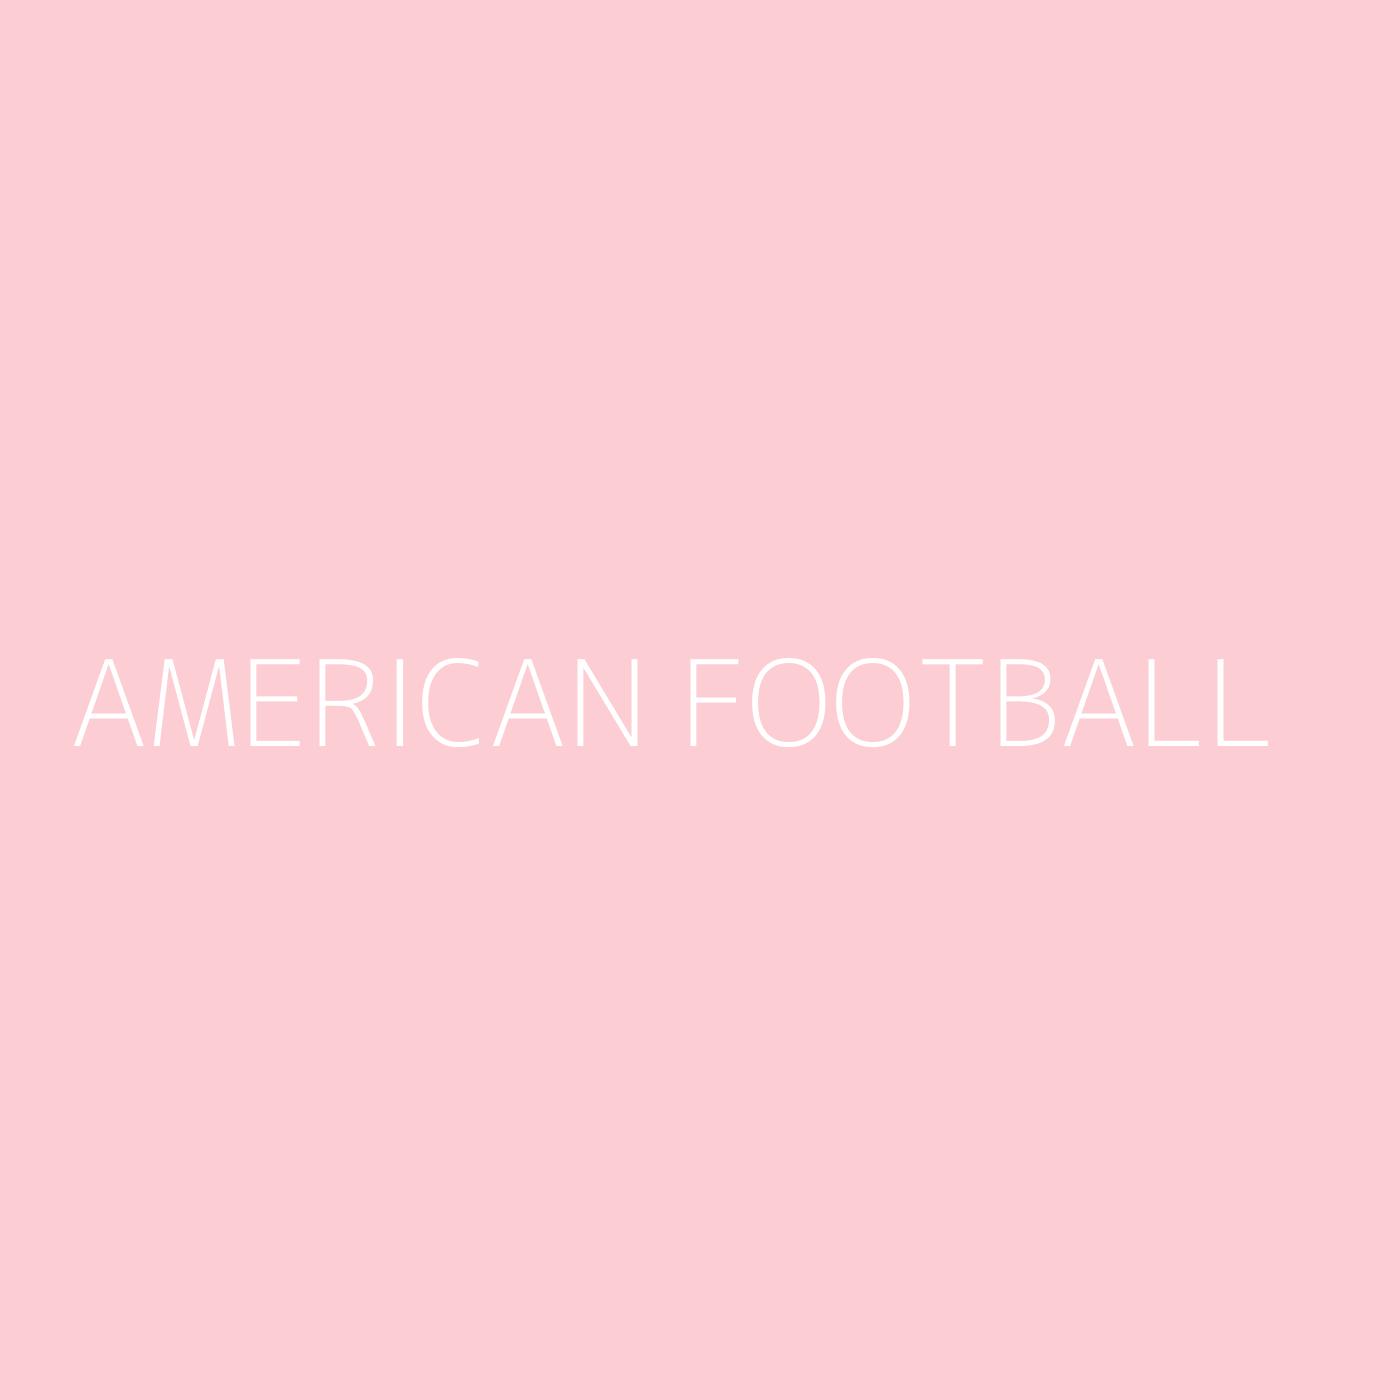 American Football Playlist - Most Popular Playlist - Kolibri Music